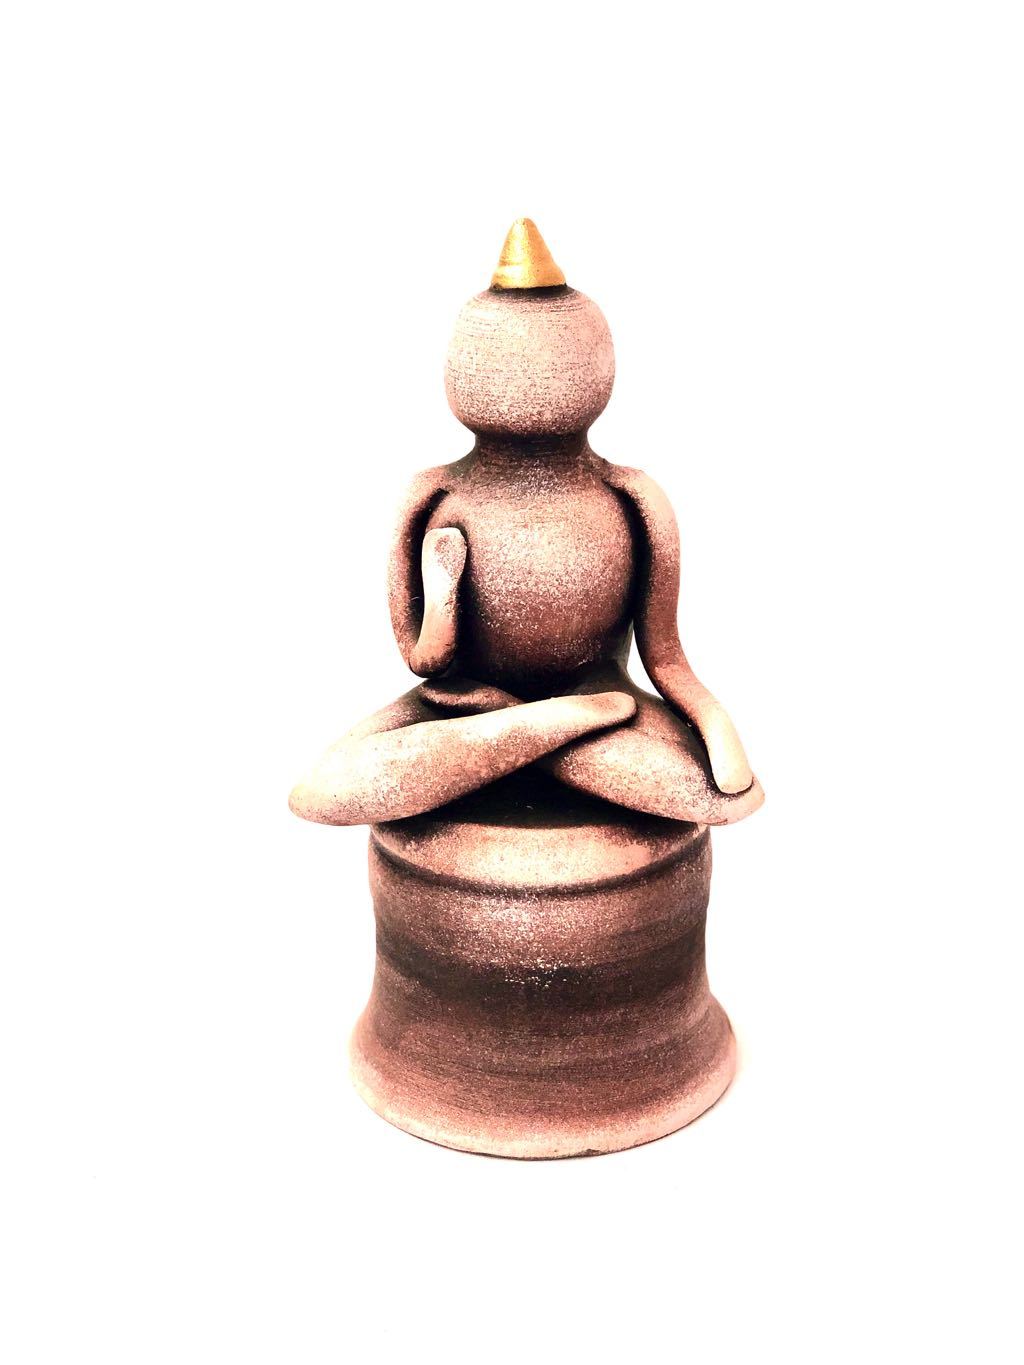 Abstract Buddha Sitting On Platform Meditation Pottery From Tamrapatra - Tamrapatra